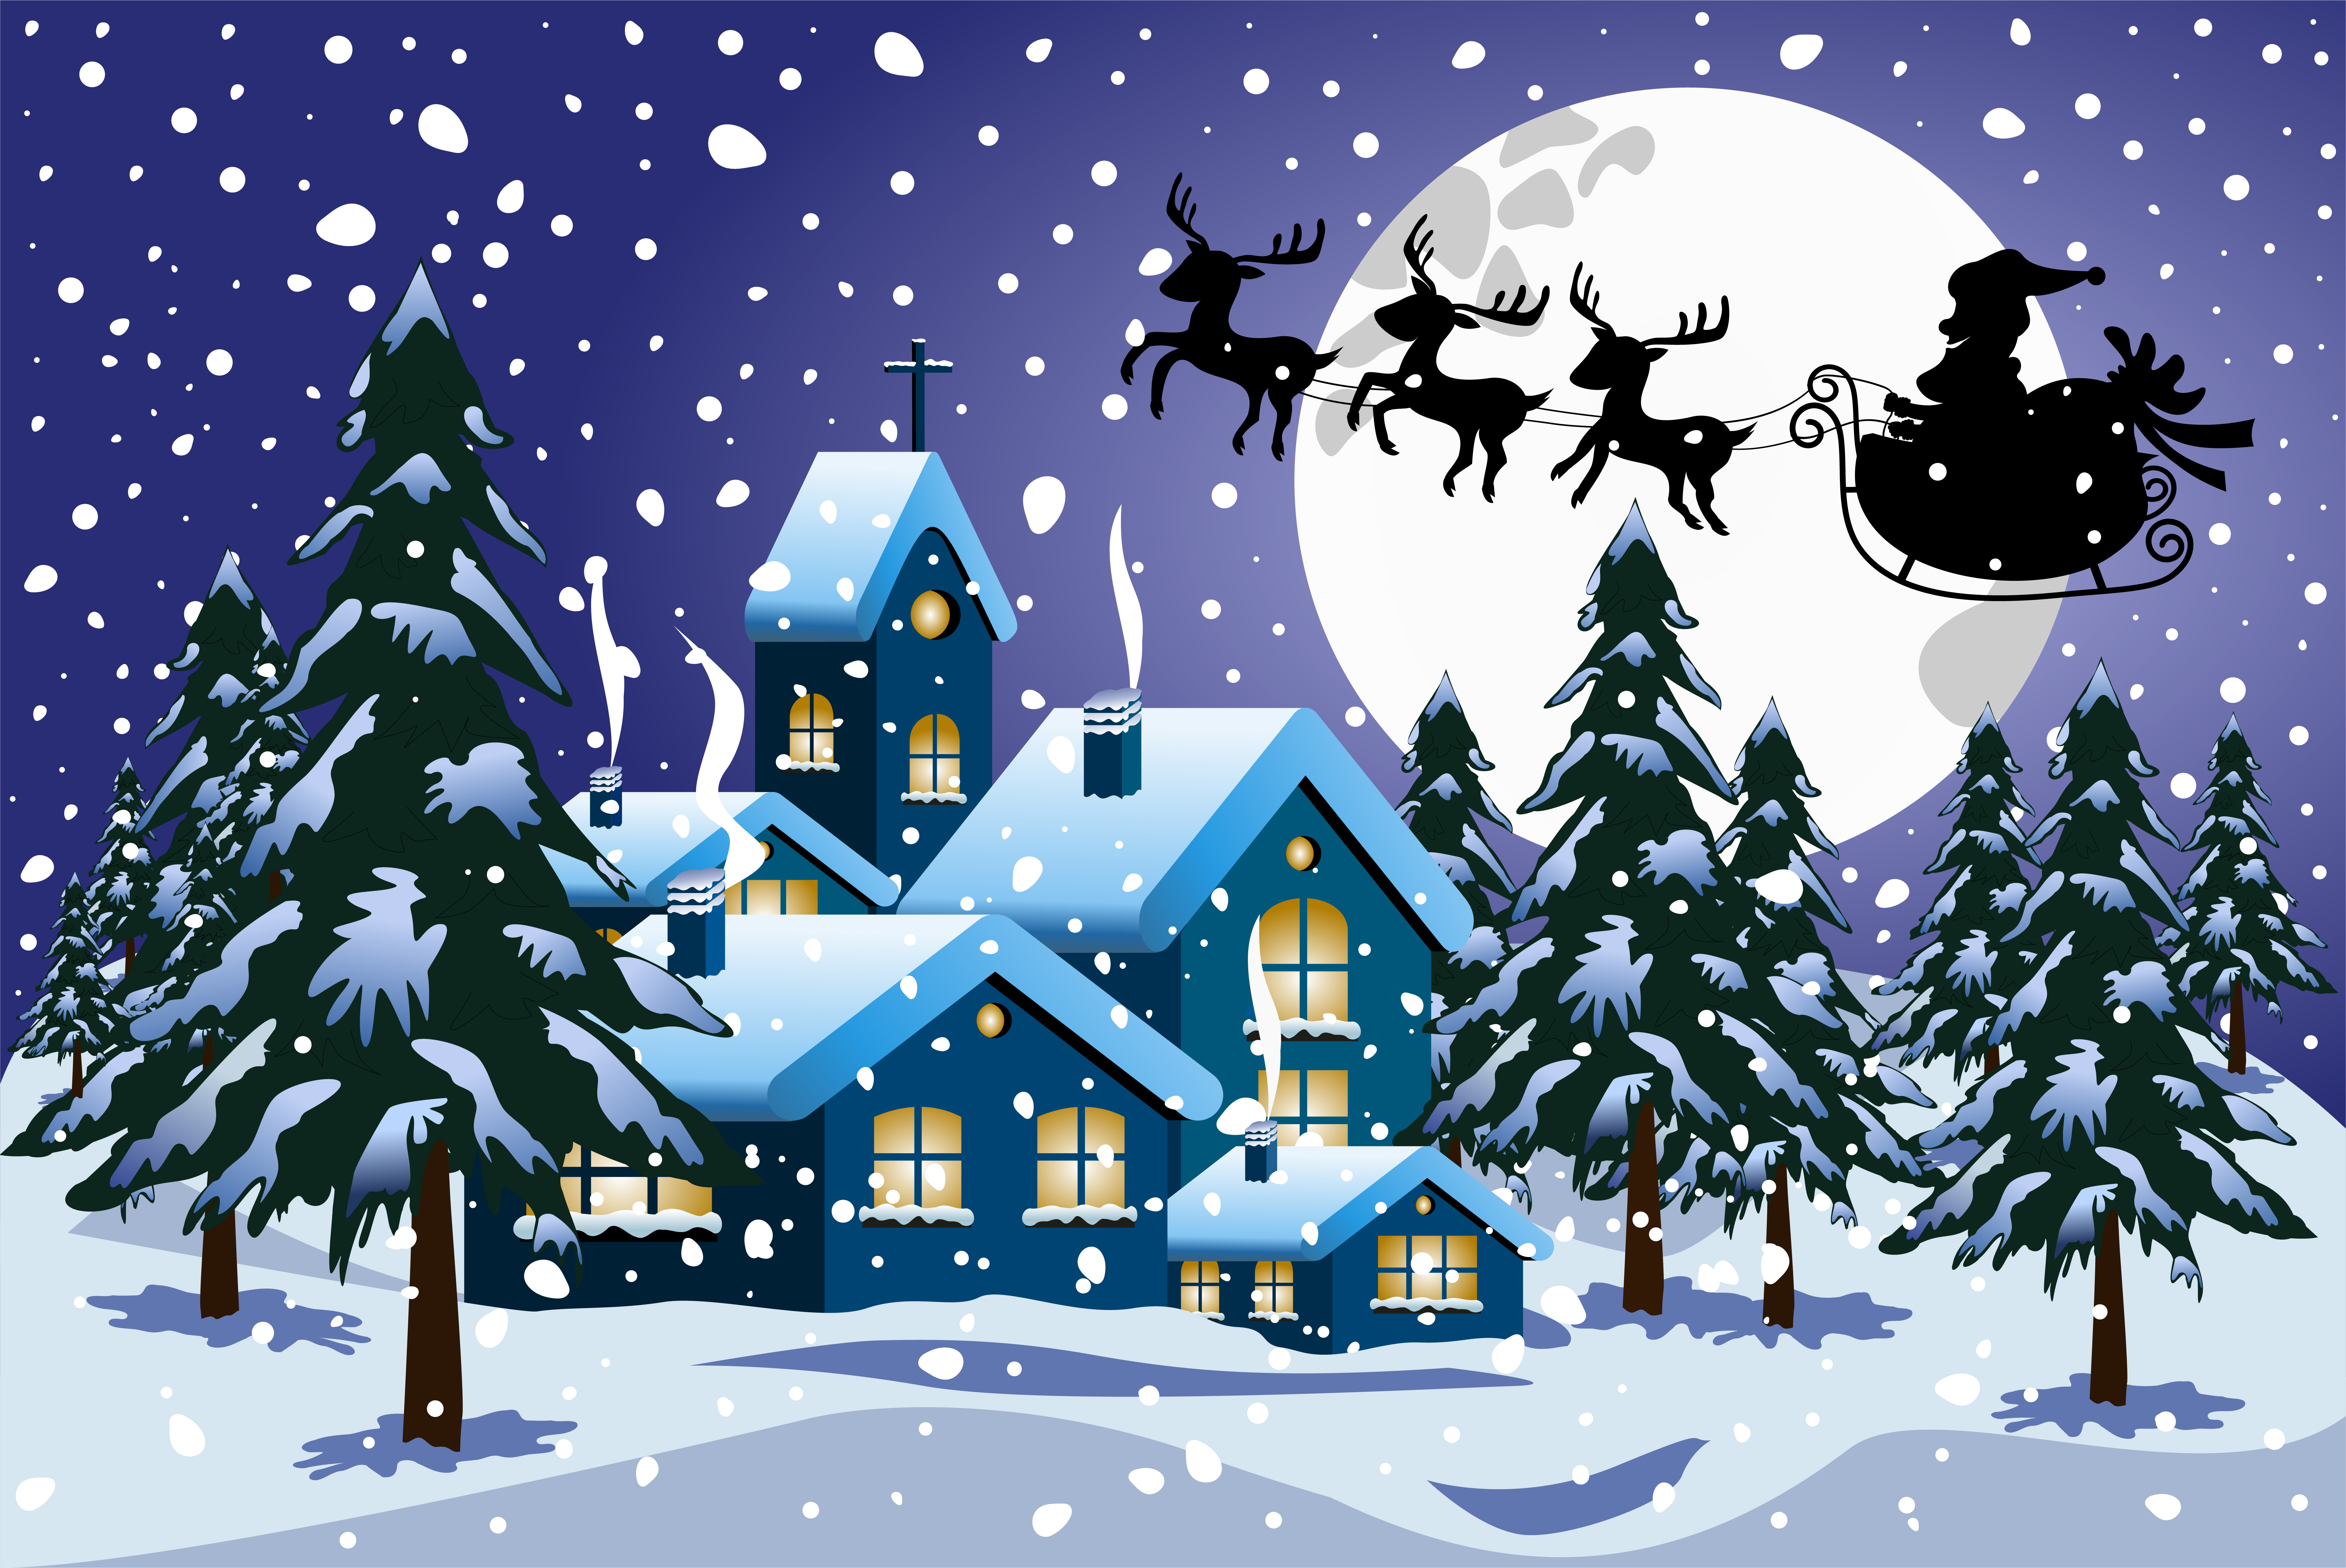 Download Cartoon snowy Christmas night scene - Download Free ...